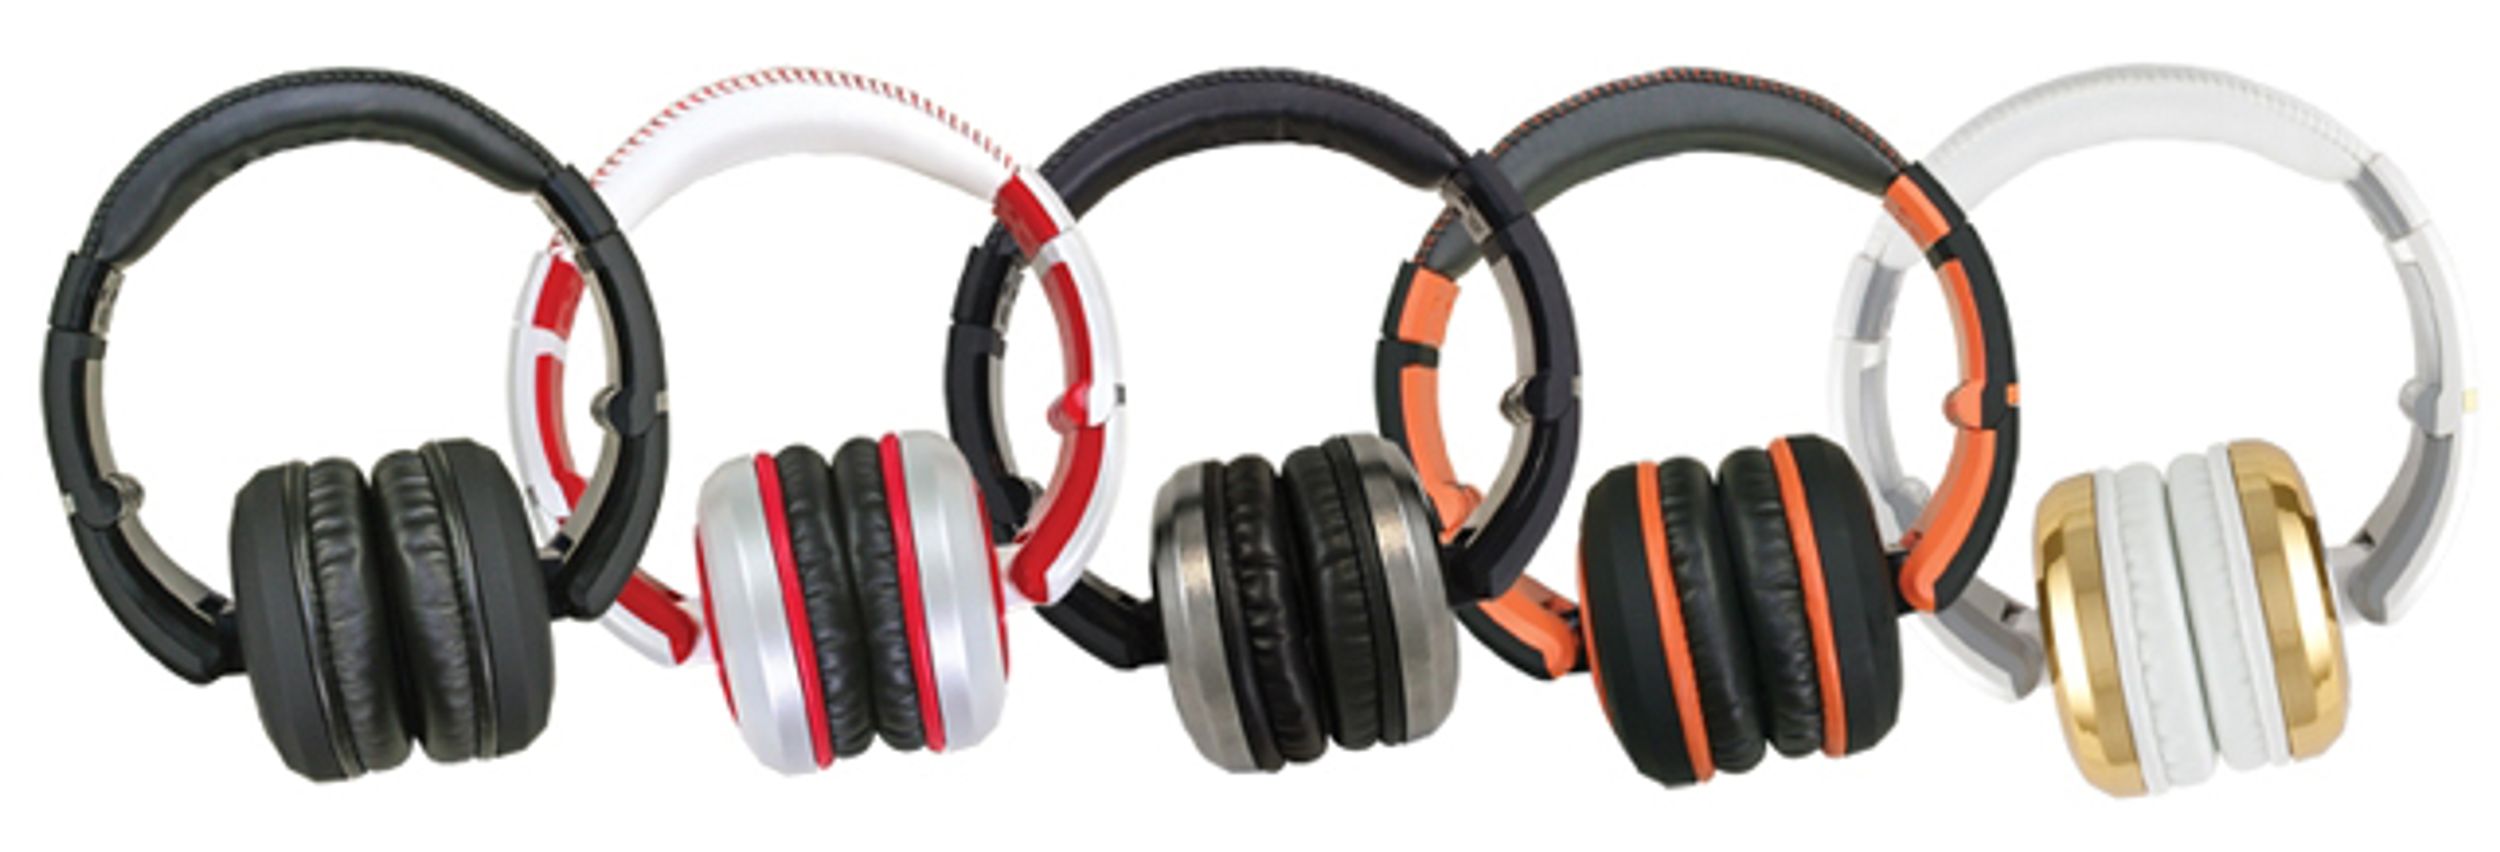 CAD Audio Expands Session Headphones